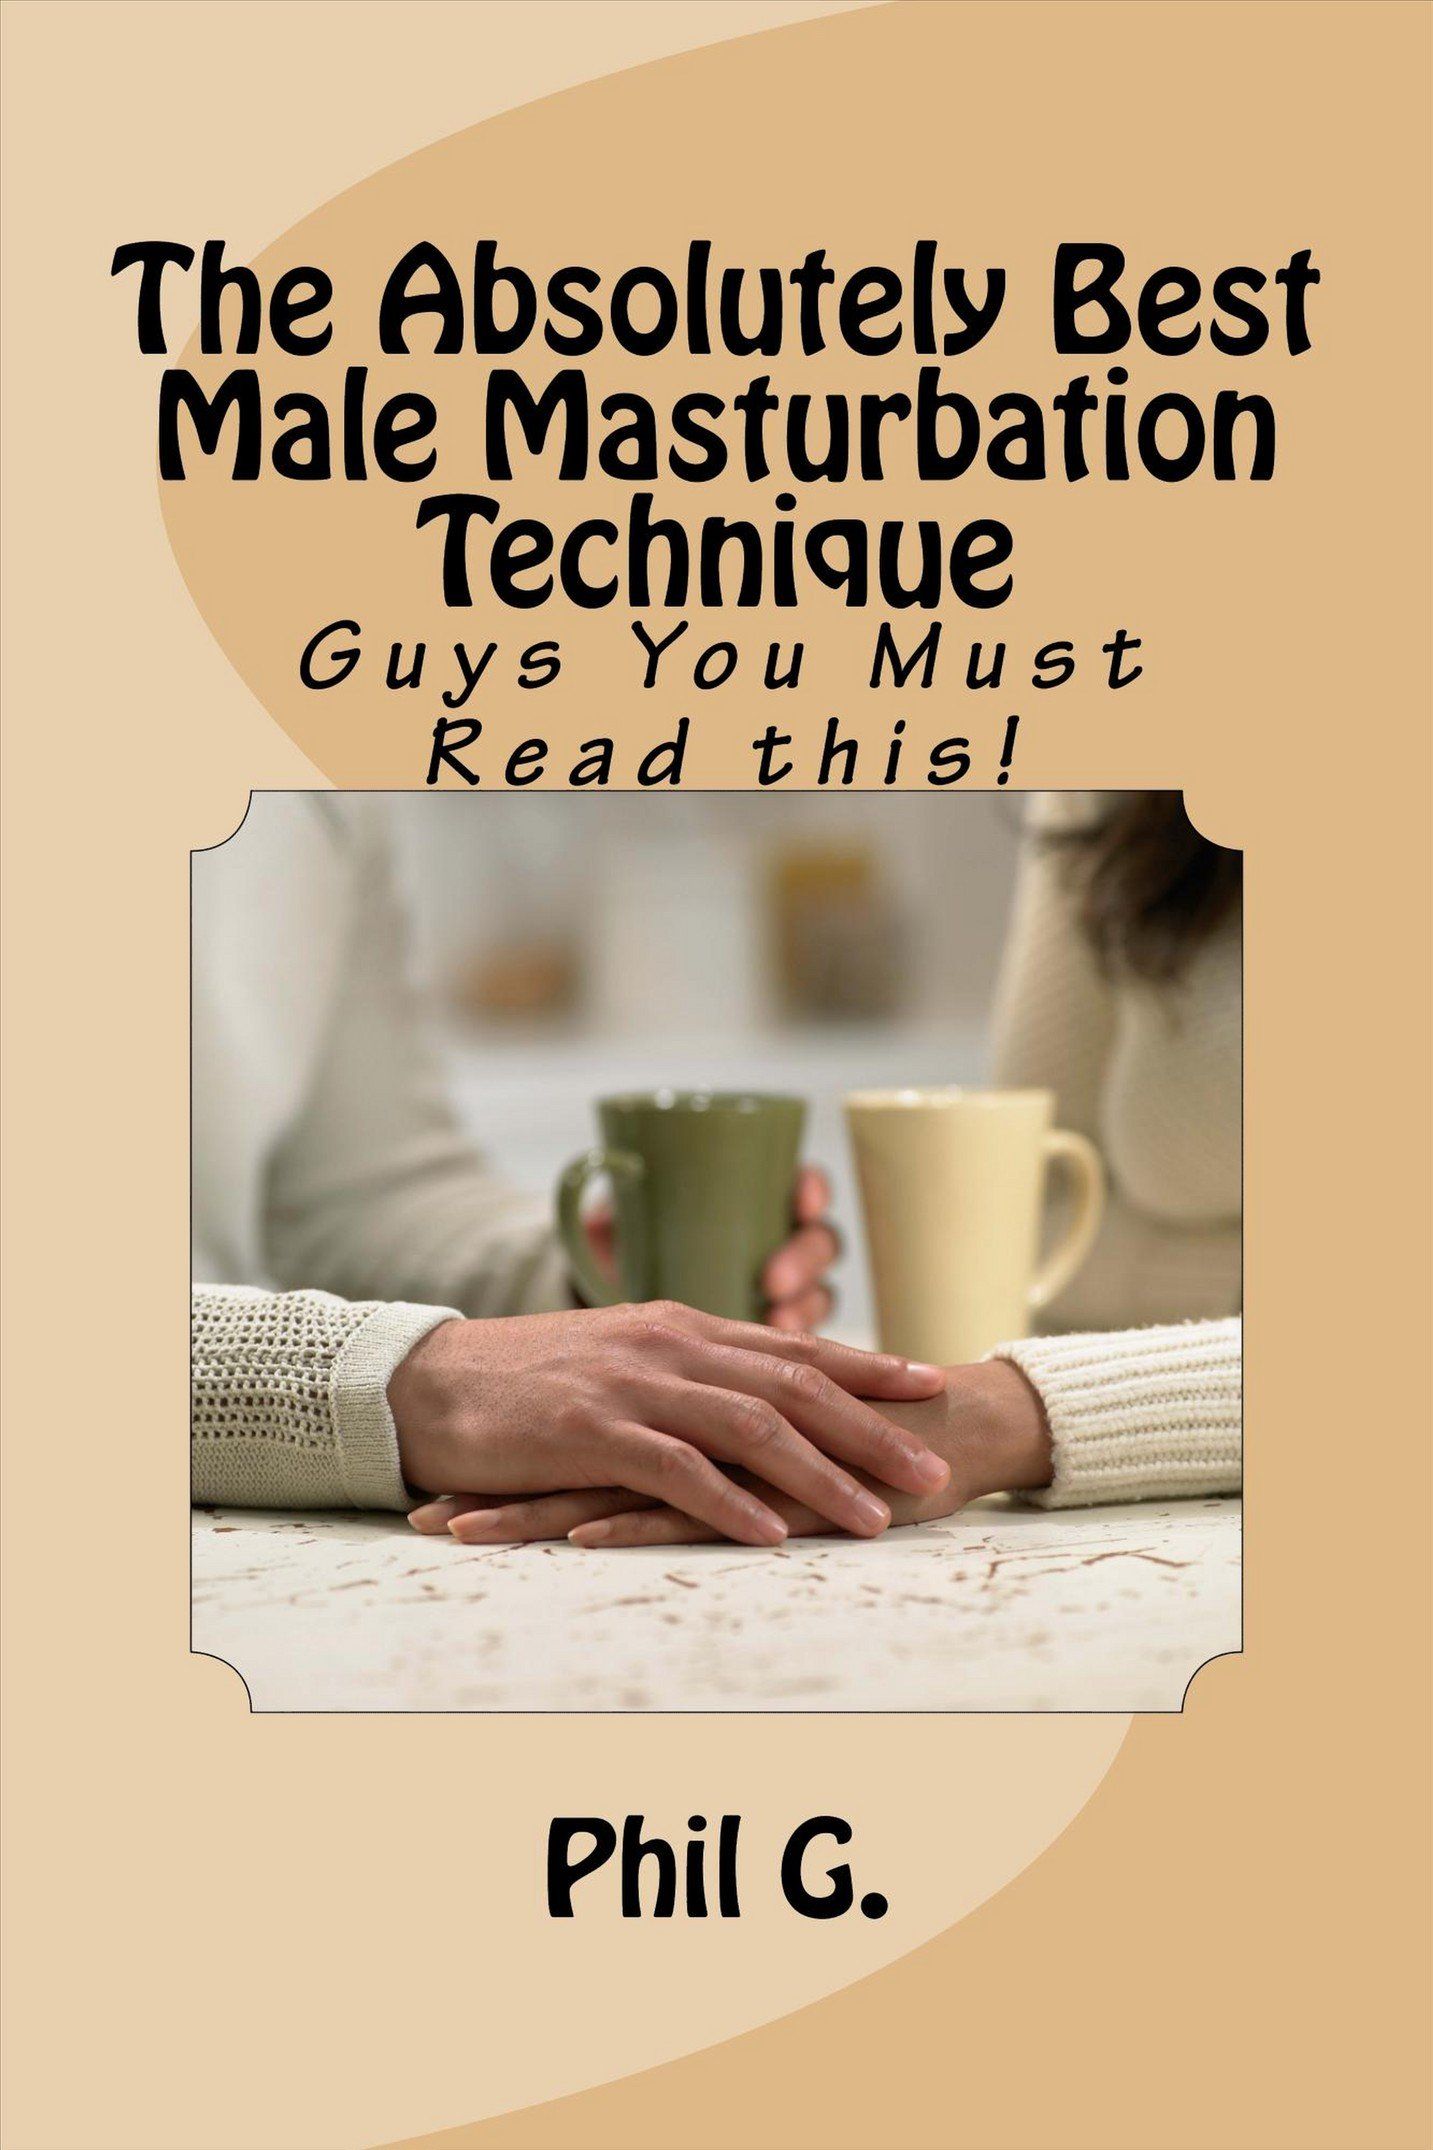 Male masturbation techniques galleries - Sex photo